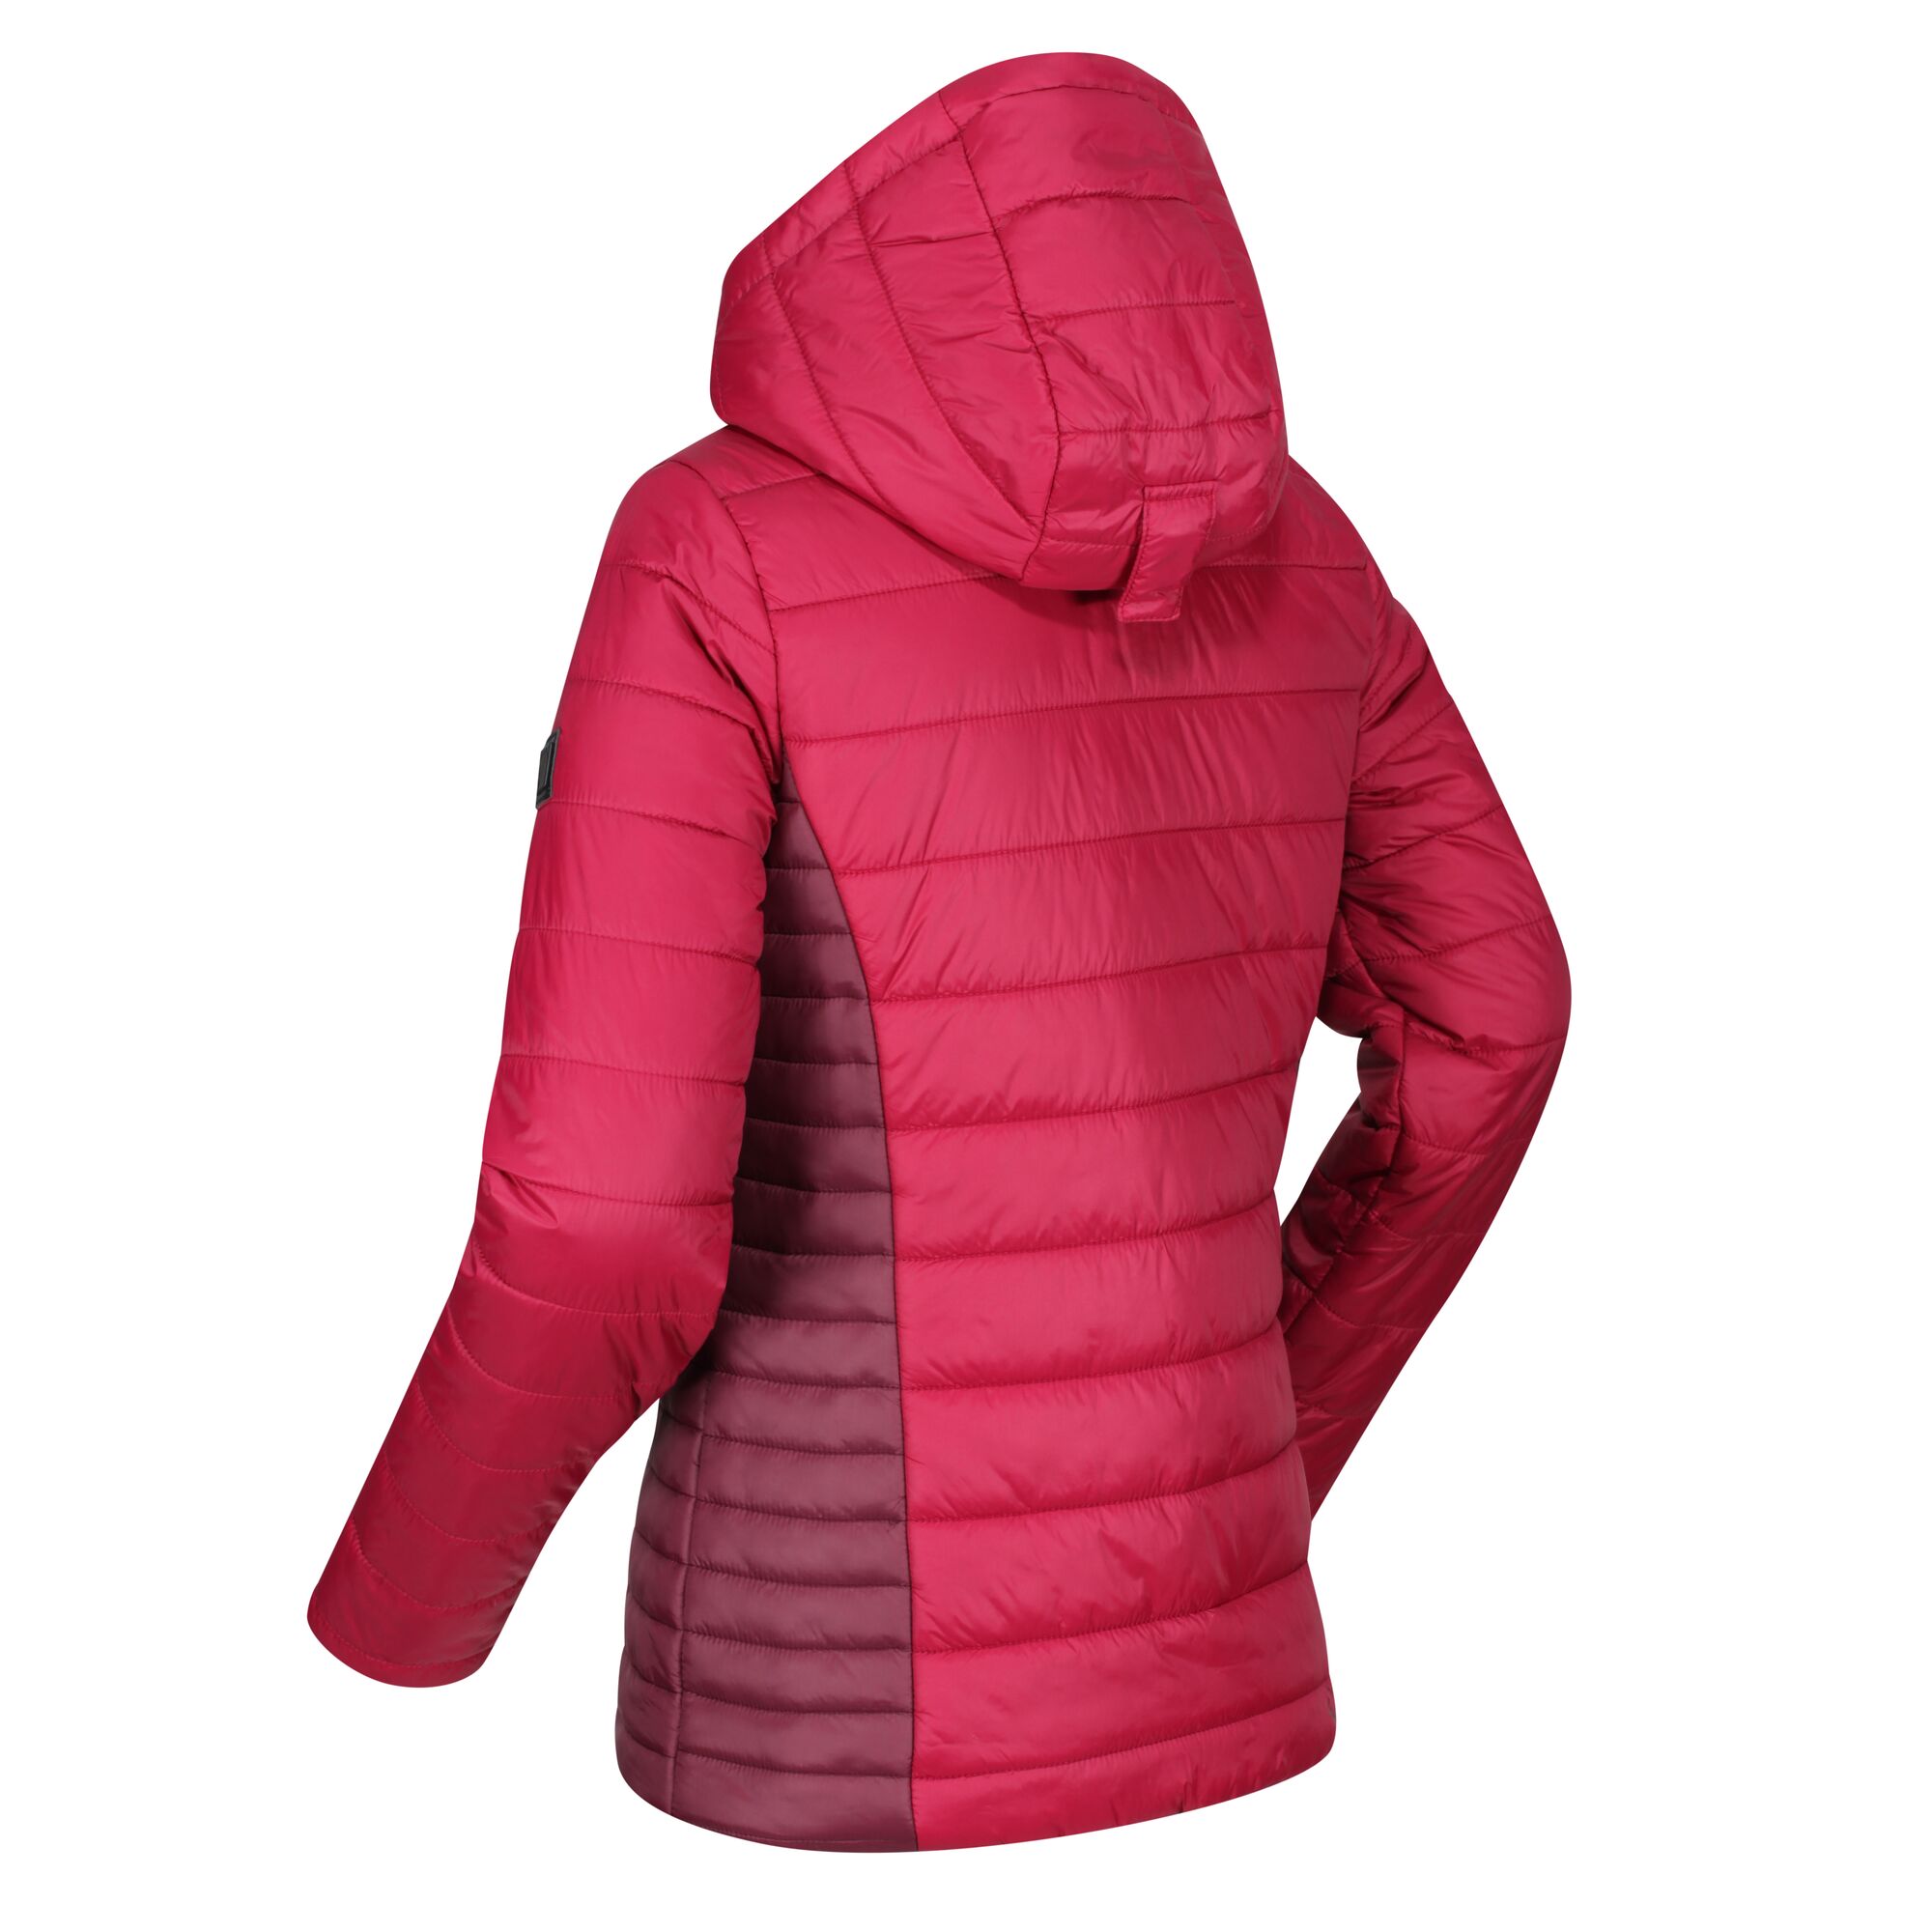 Regatta Voltera Loft II Womens Heated Jacket Insulated down touch | eBay